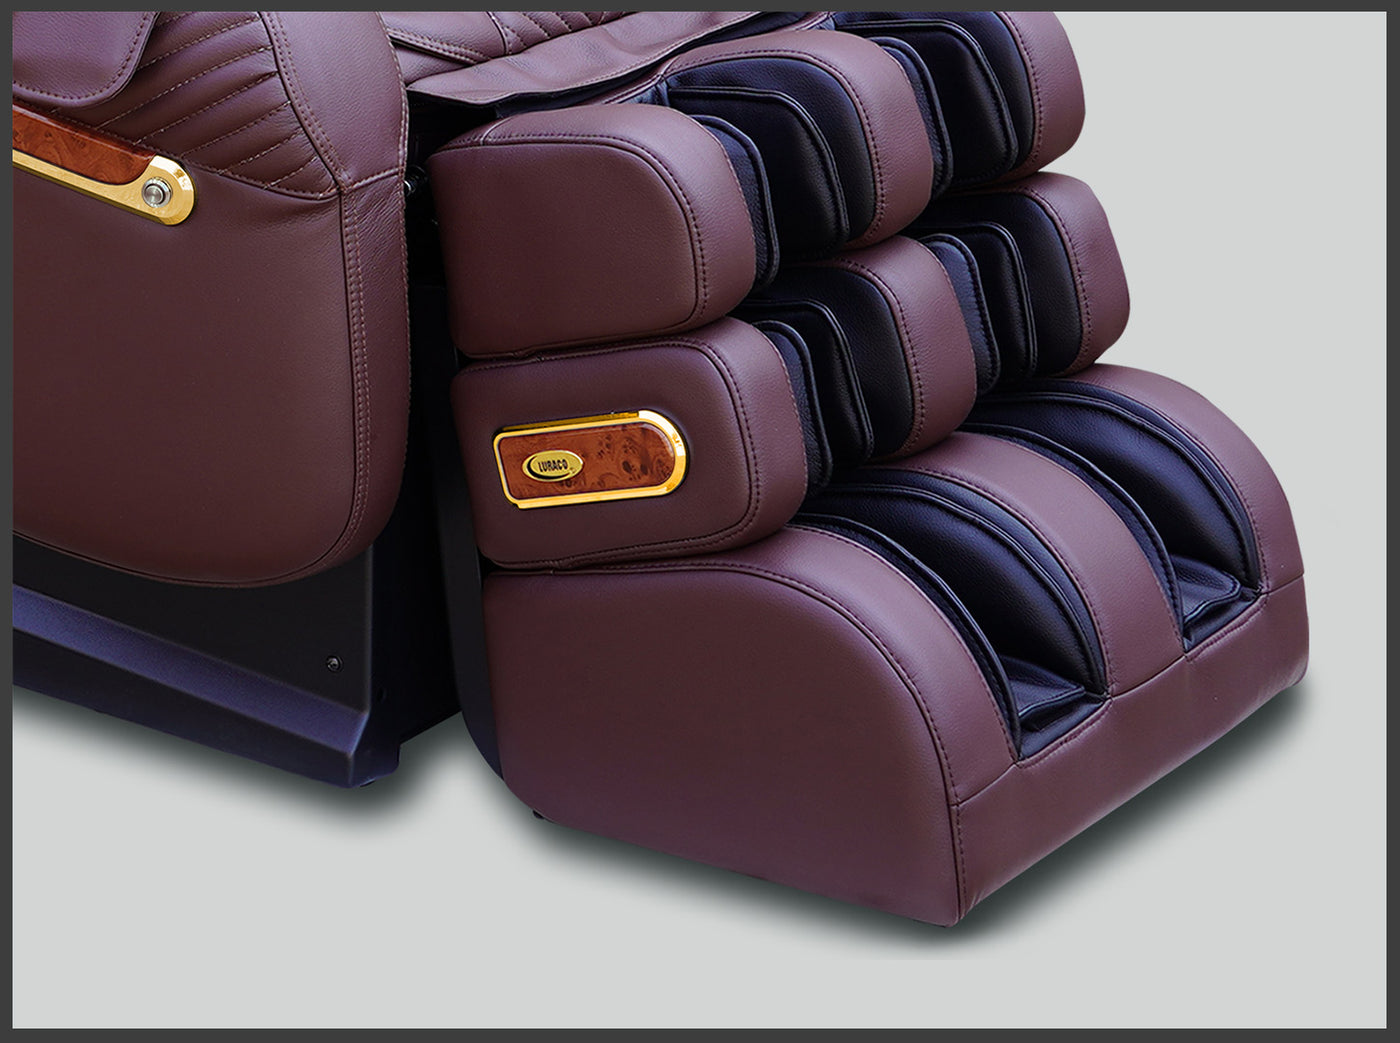 Luraco iRobotics 9 MAX Royal Edition Medical Massage Chair